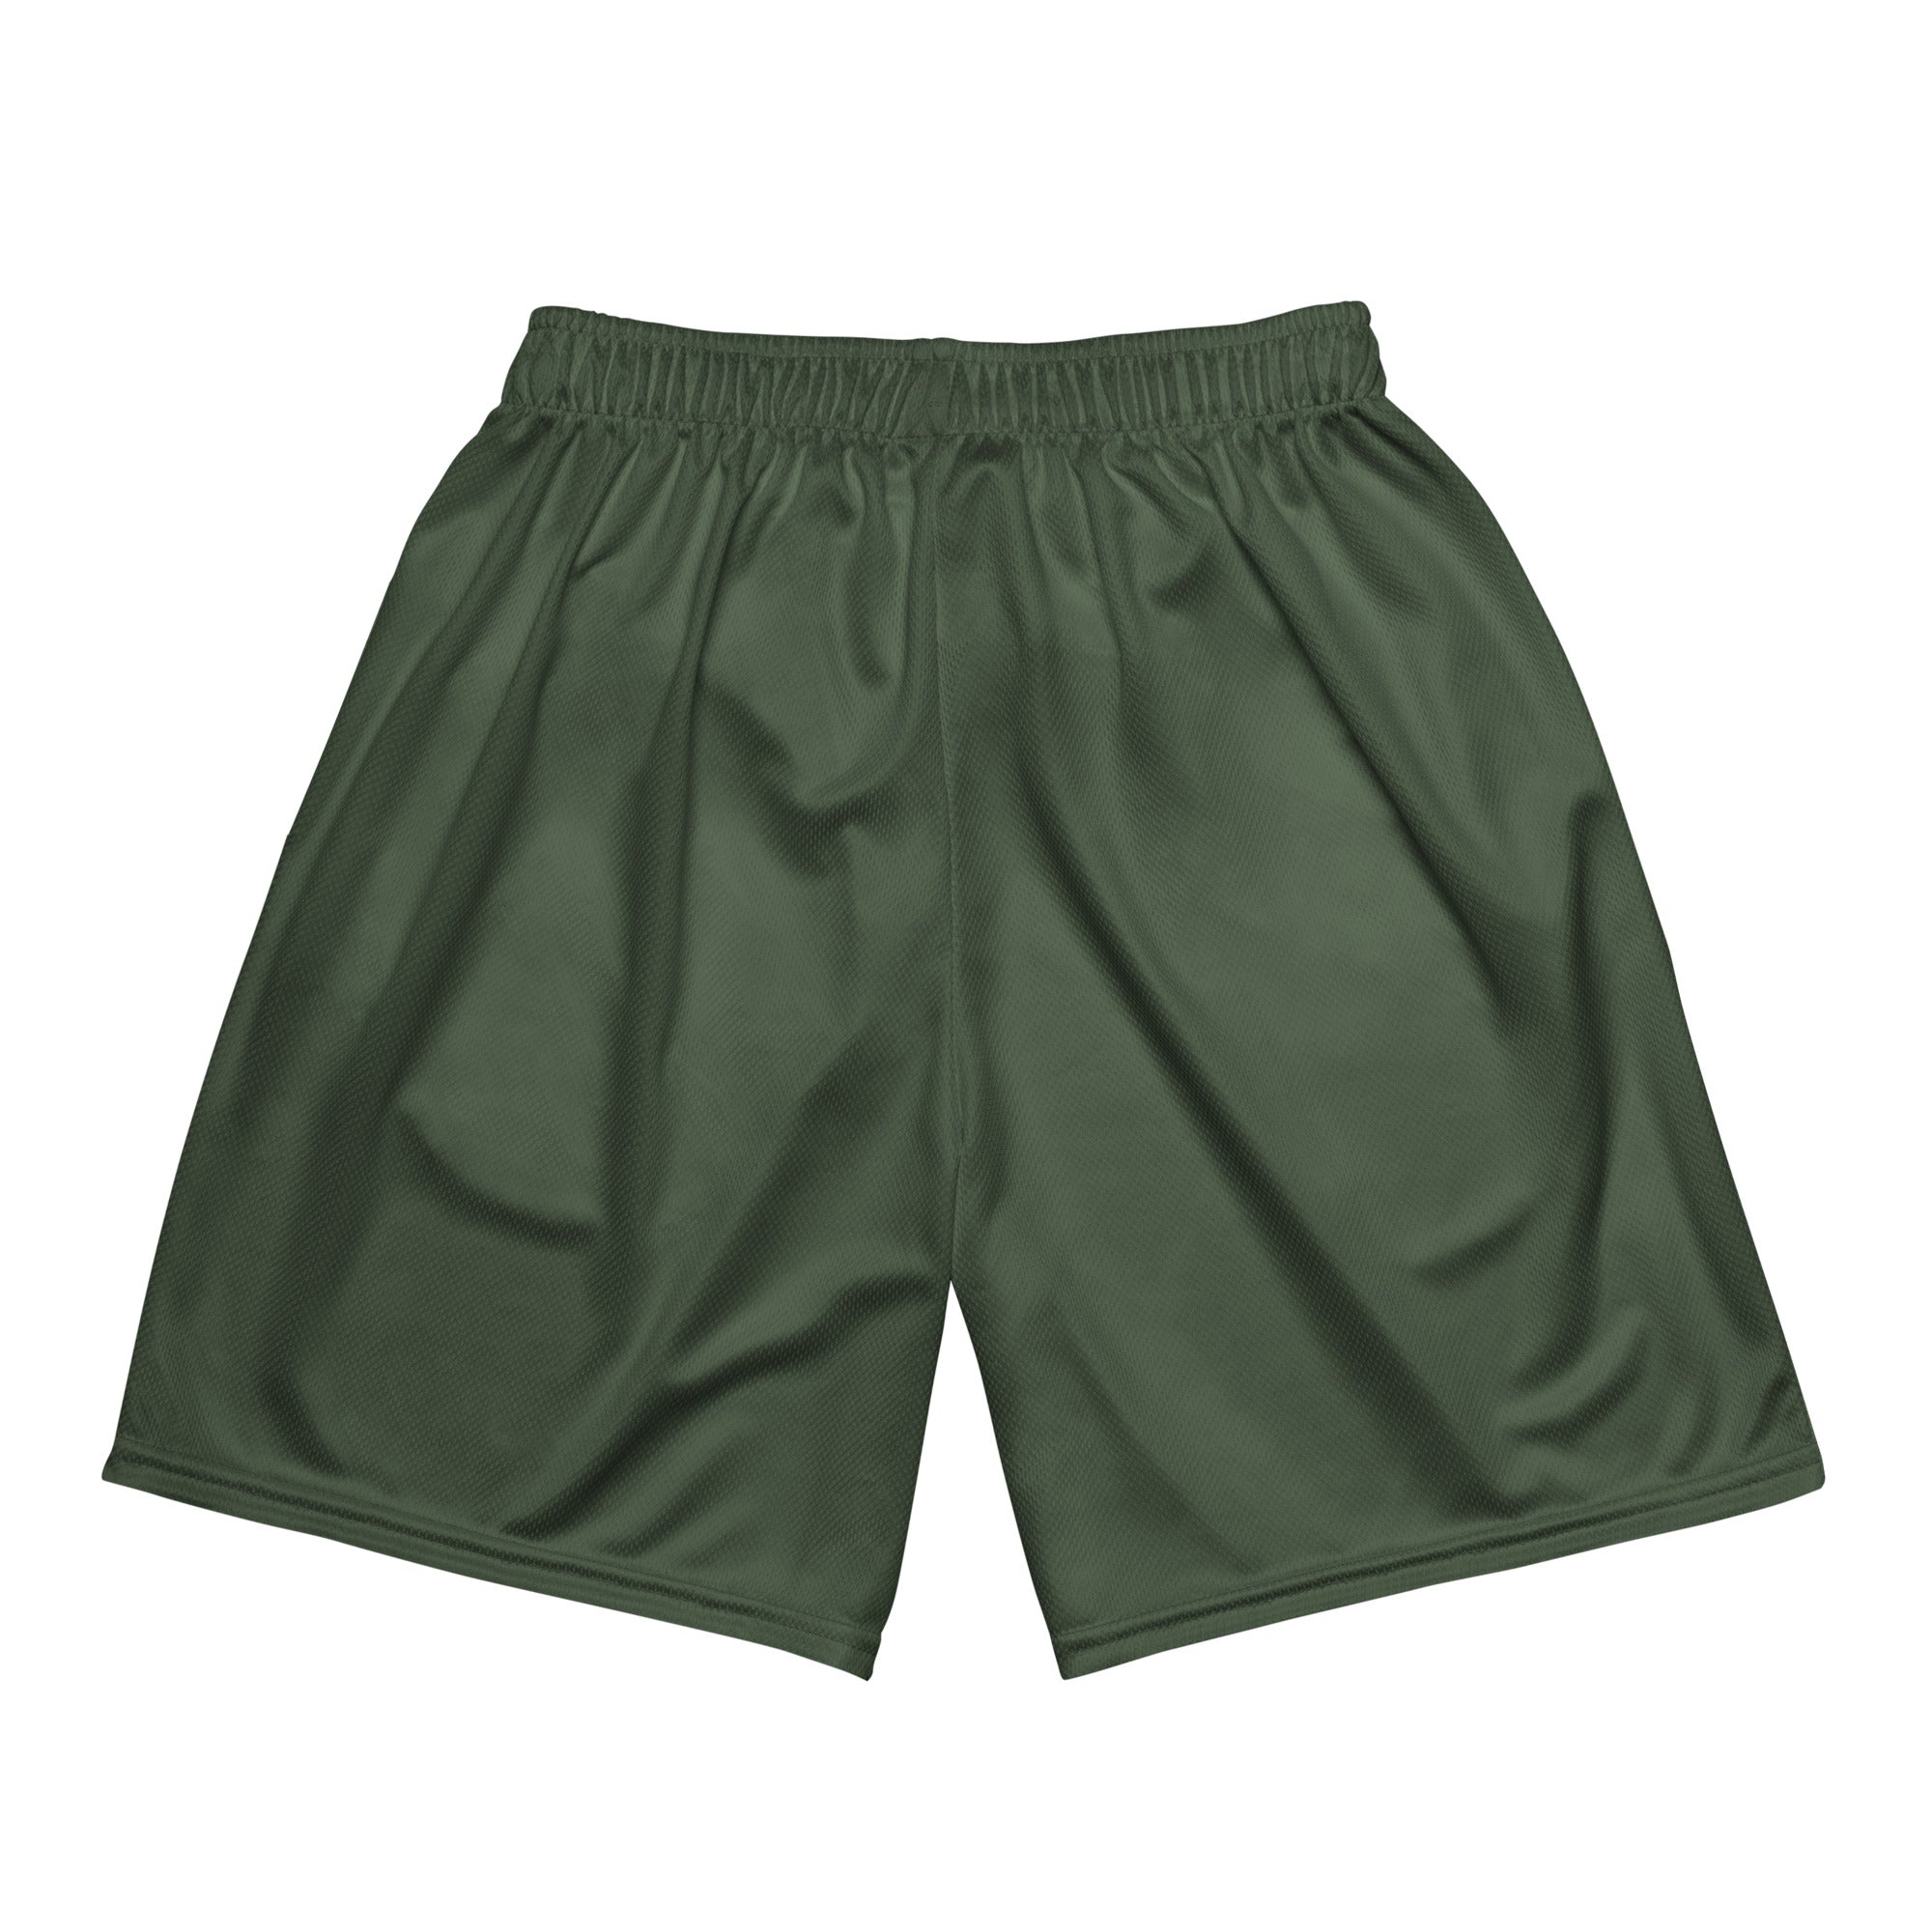 Distressed Unisex mesh shorts